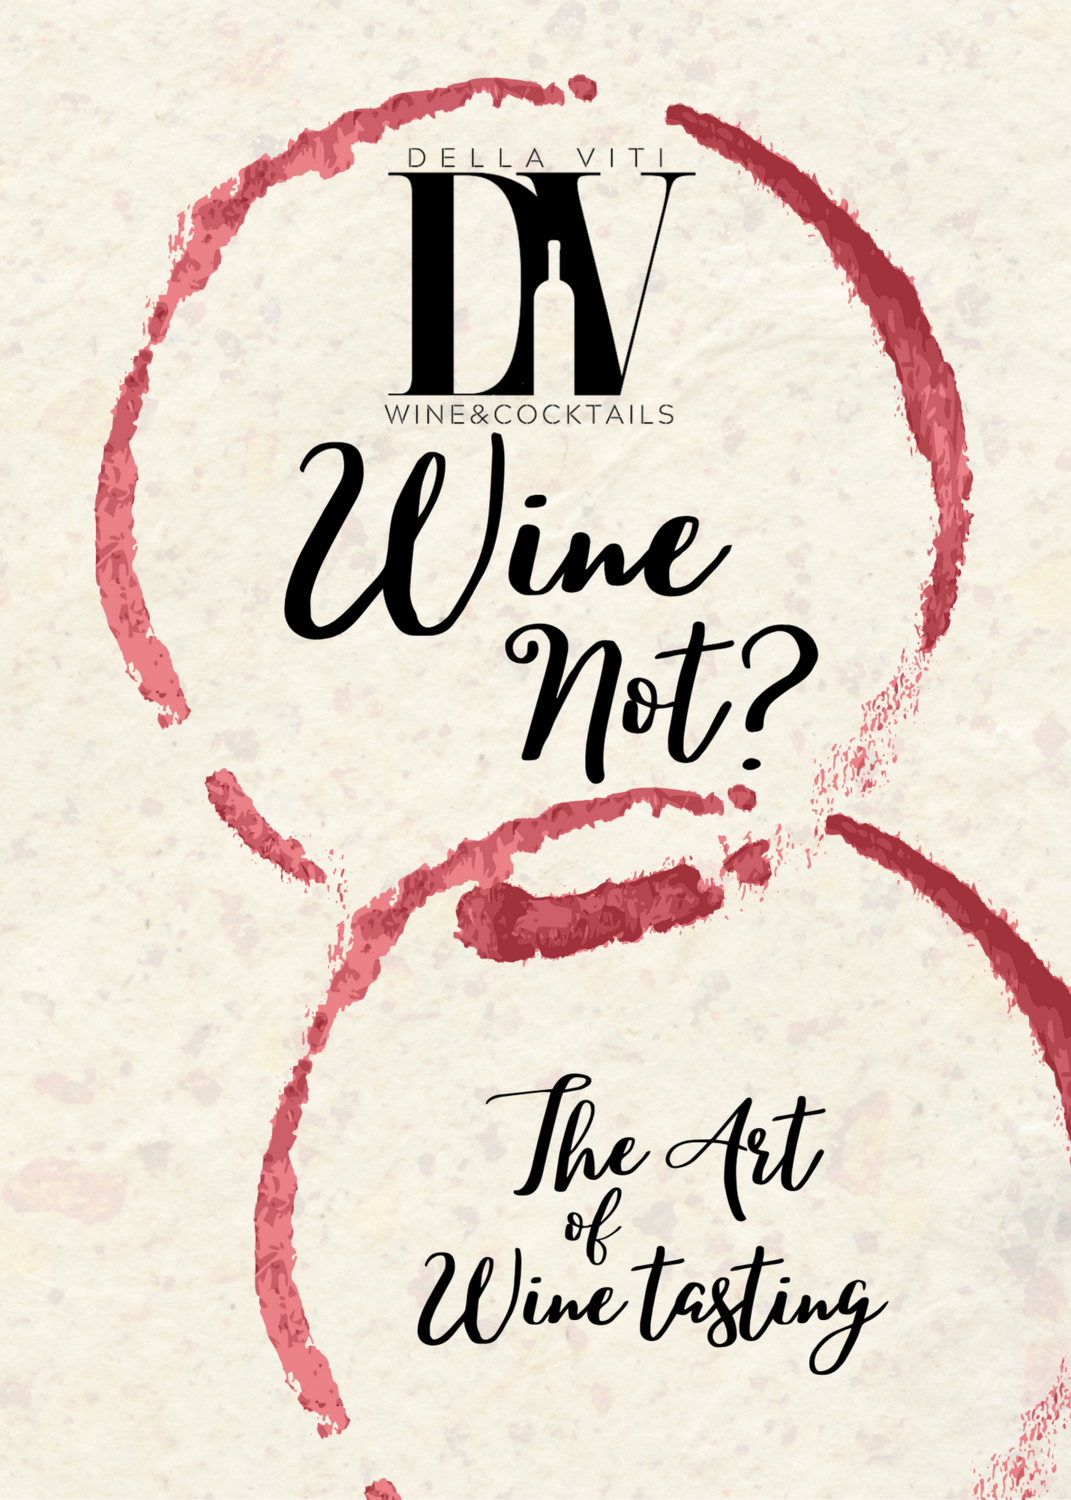 Della Viti Wine Tasting Journal!